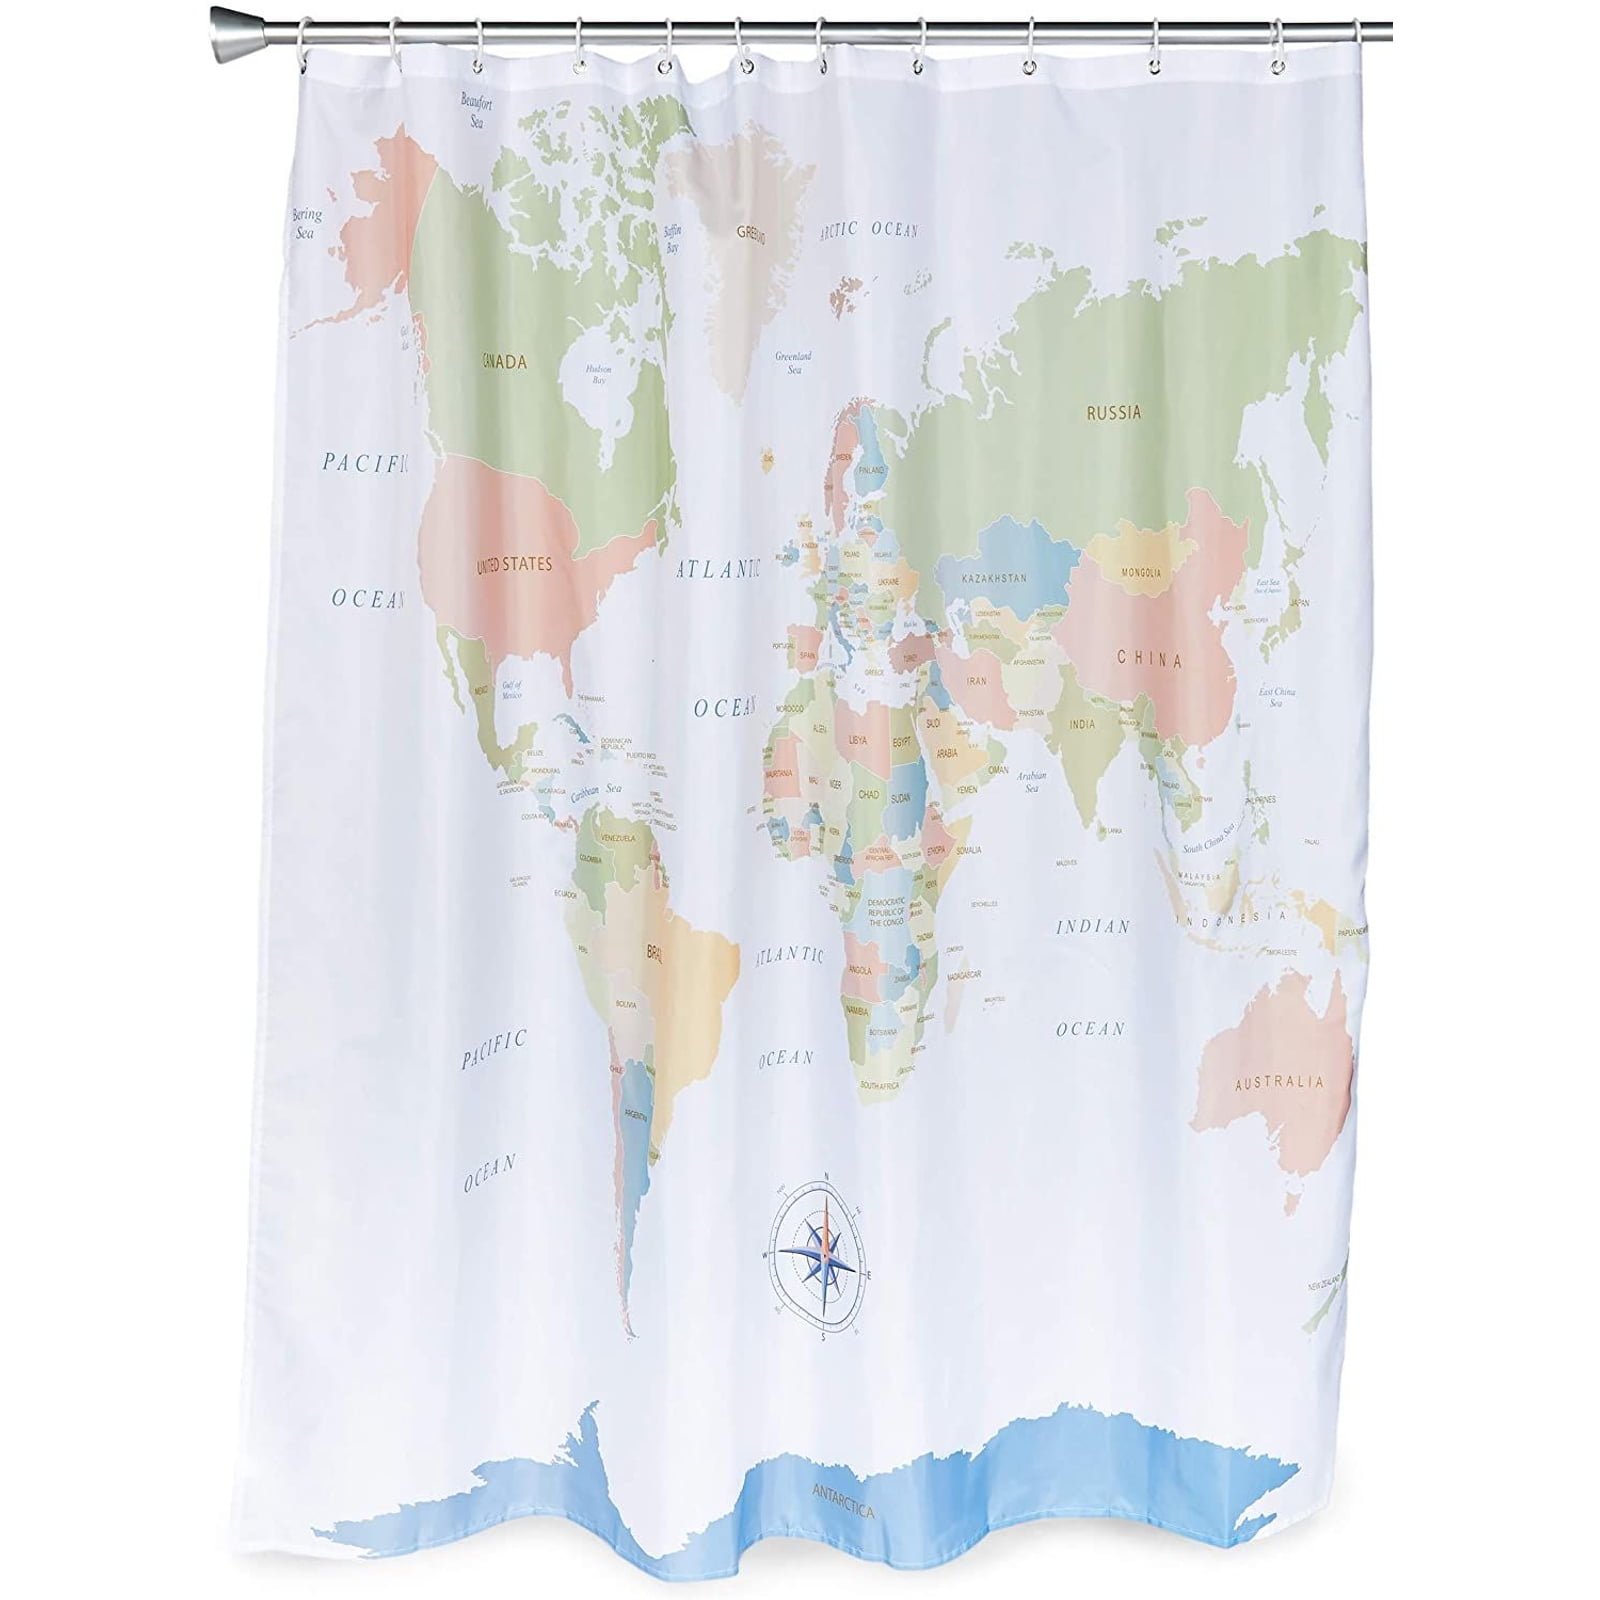 Shower Curtain Set Polyester Waterproof Fabric Hooks Antique World Map Pattern 